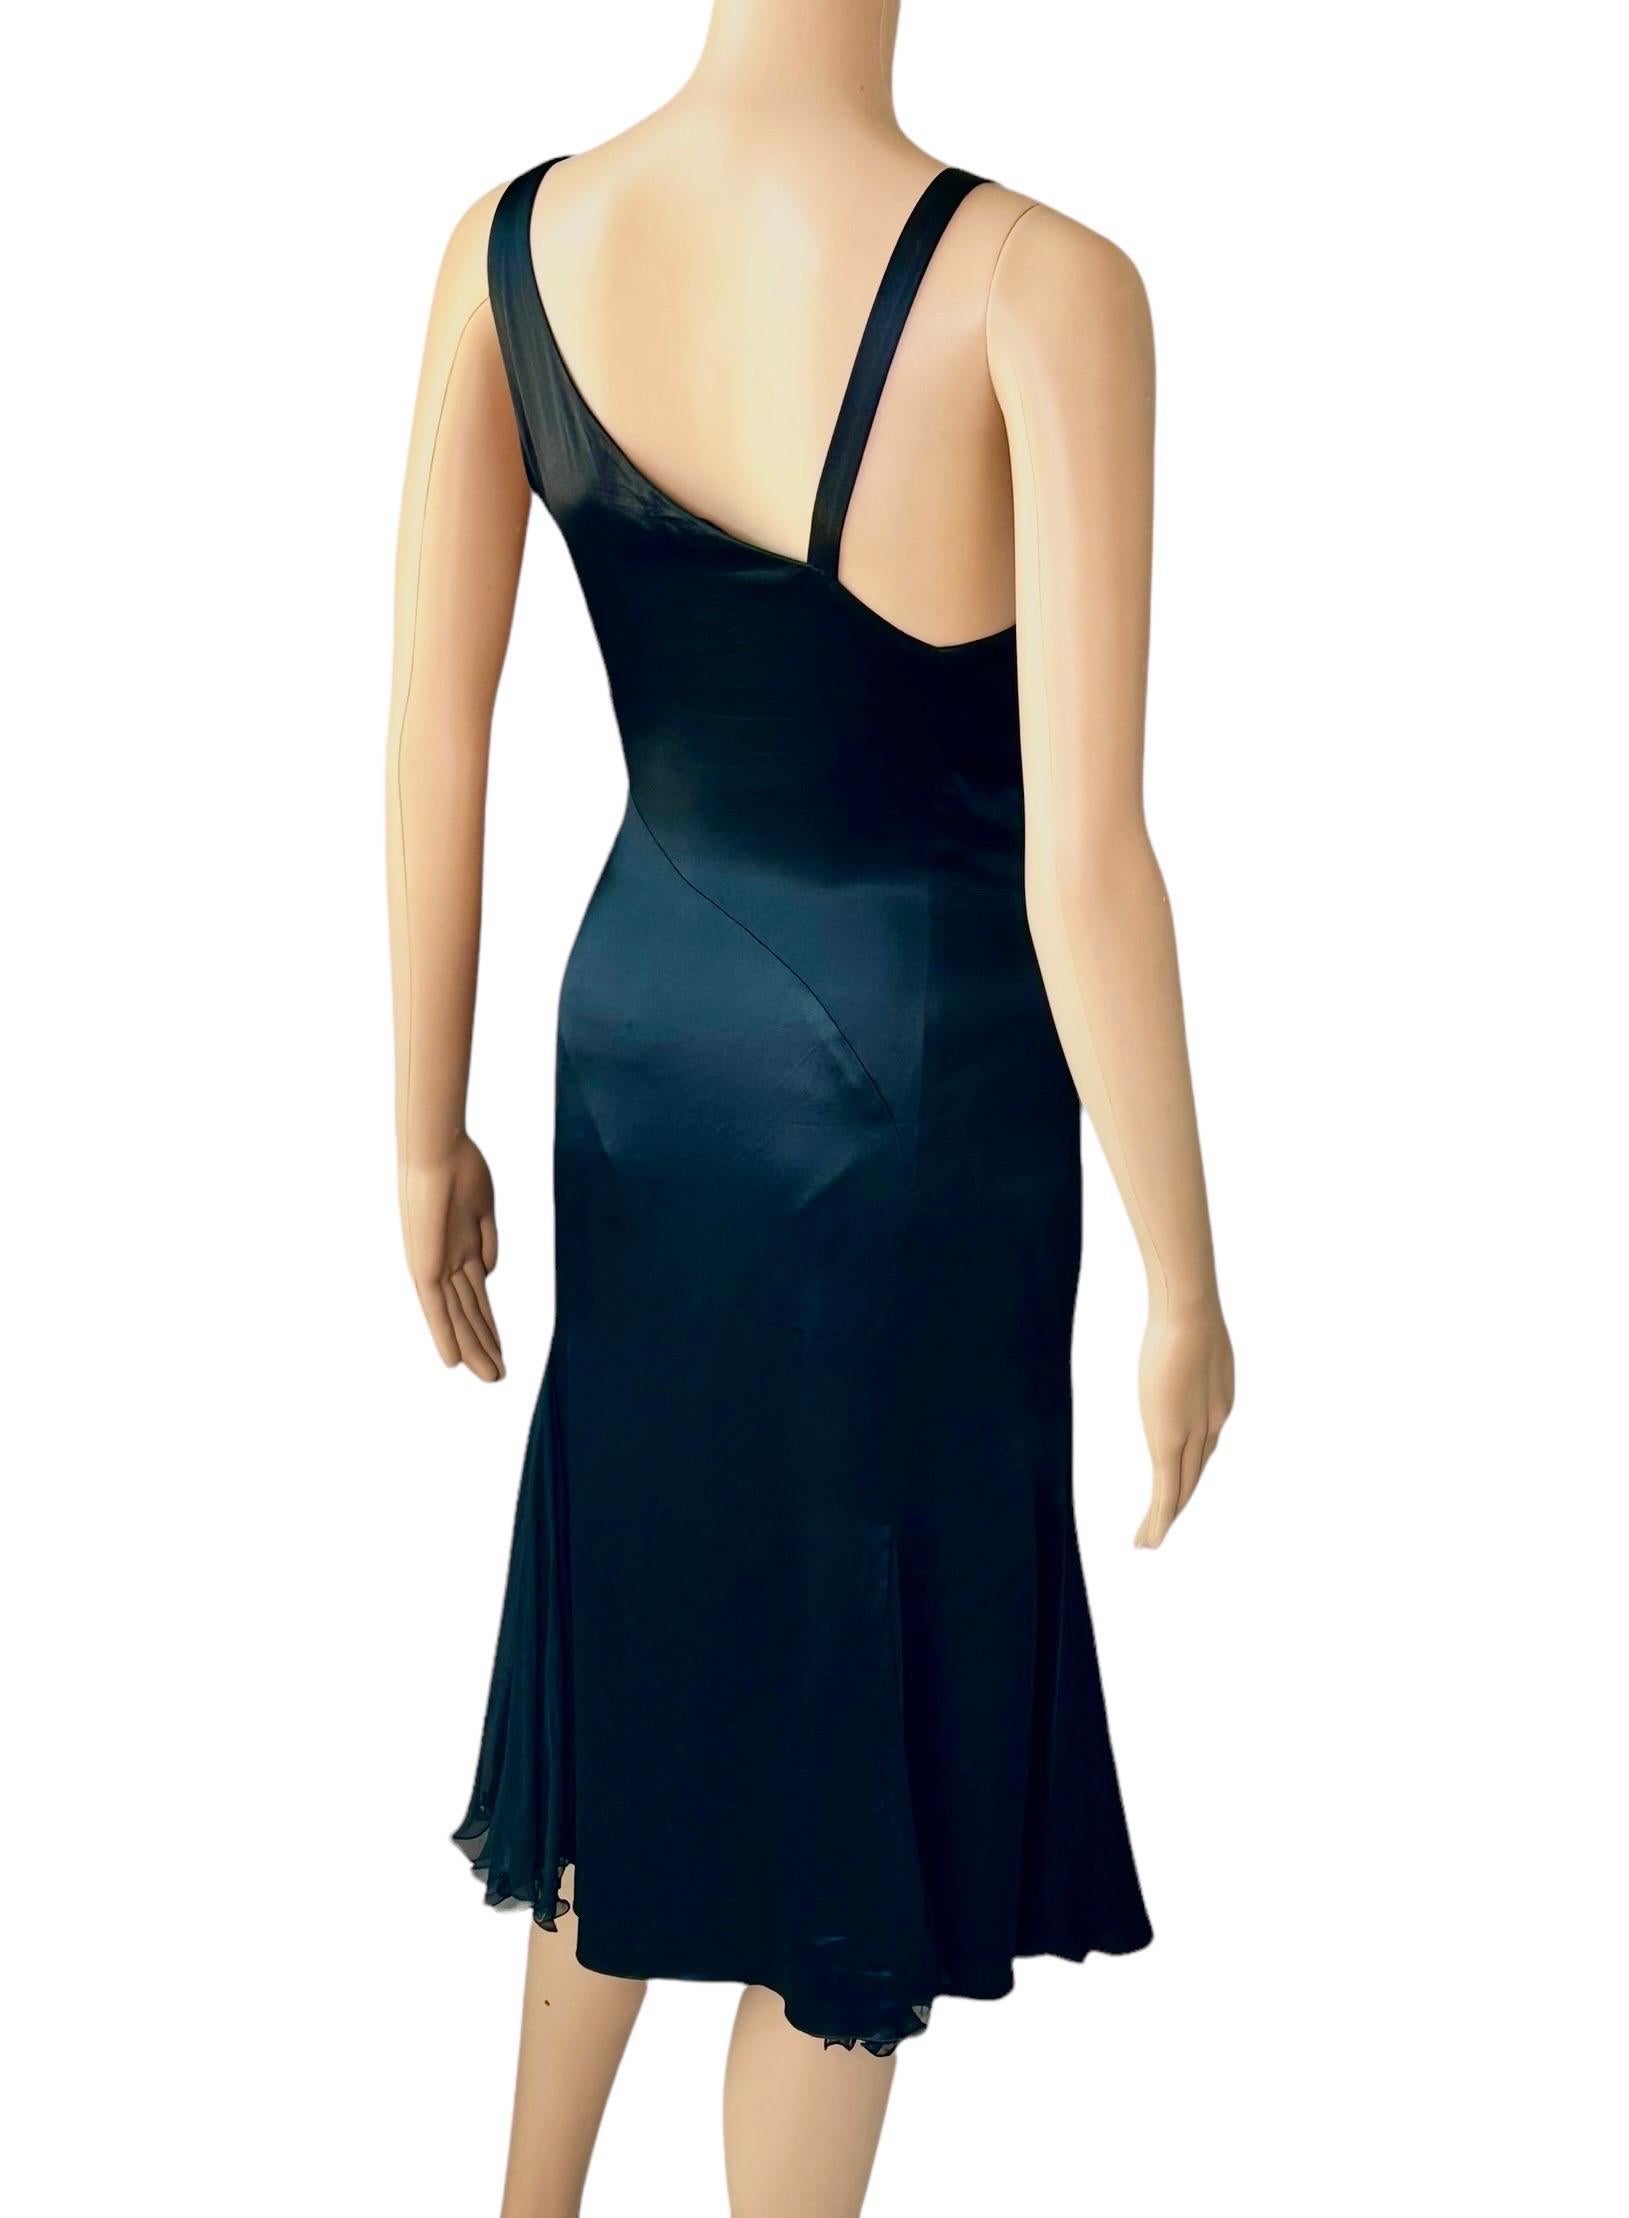 Versace F/W 2004 Embellished Buckle Studded Detail Plunging Black Evening Dress For Sale 9